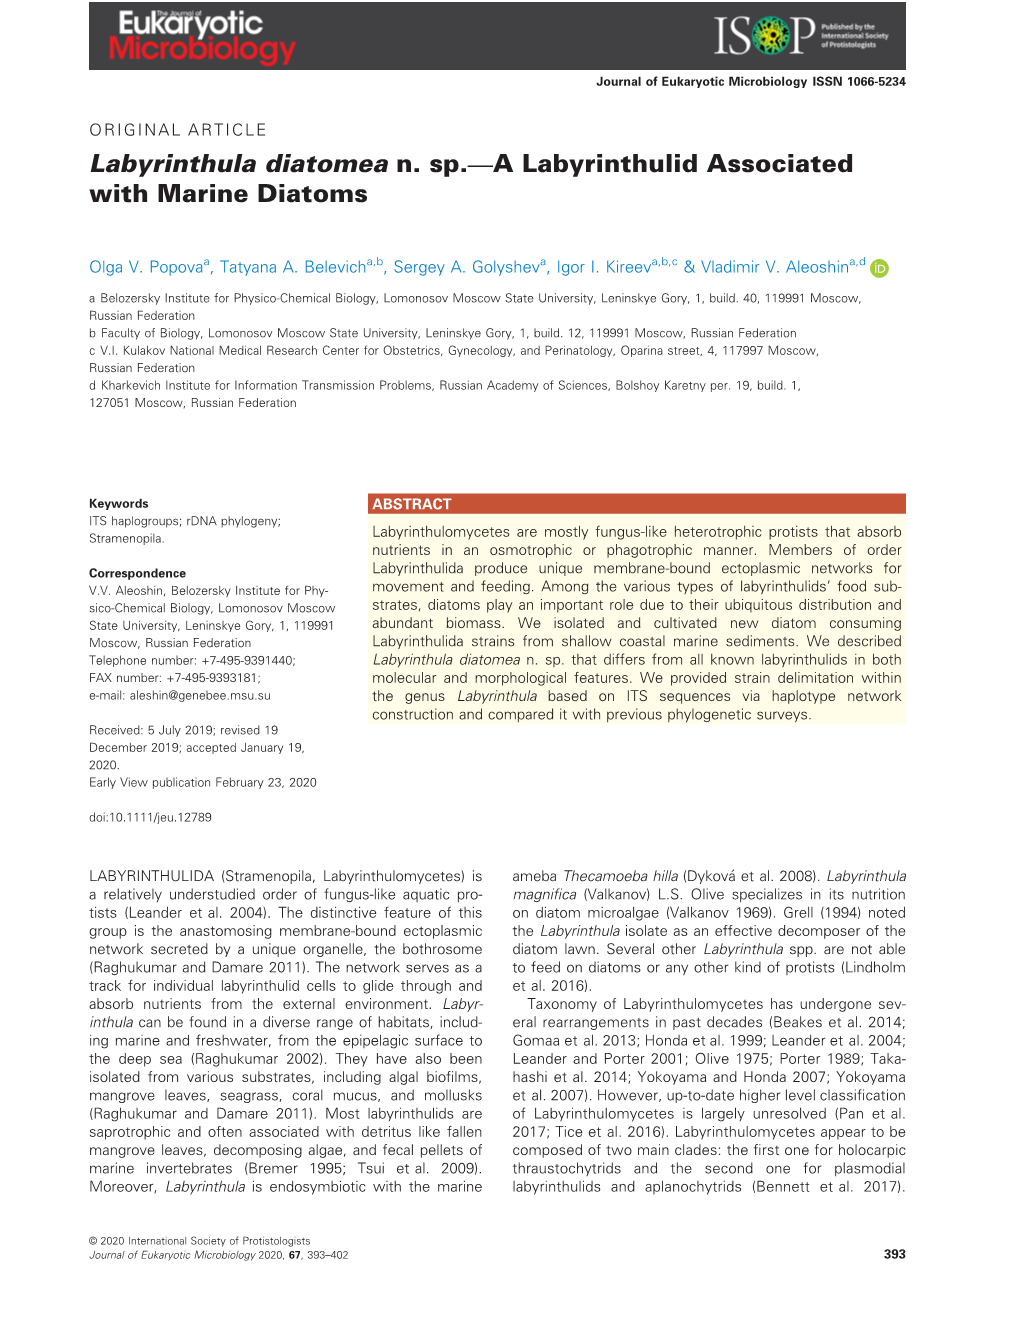 Labyrinthula Diatomea N. Sp.—A Labyrinthulid Associated with Marine Diatoms